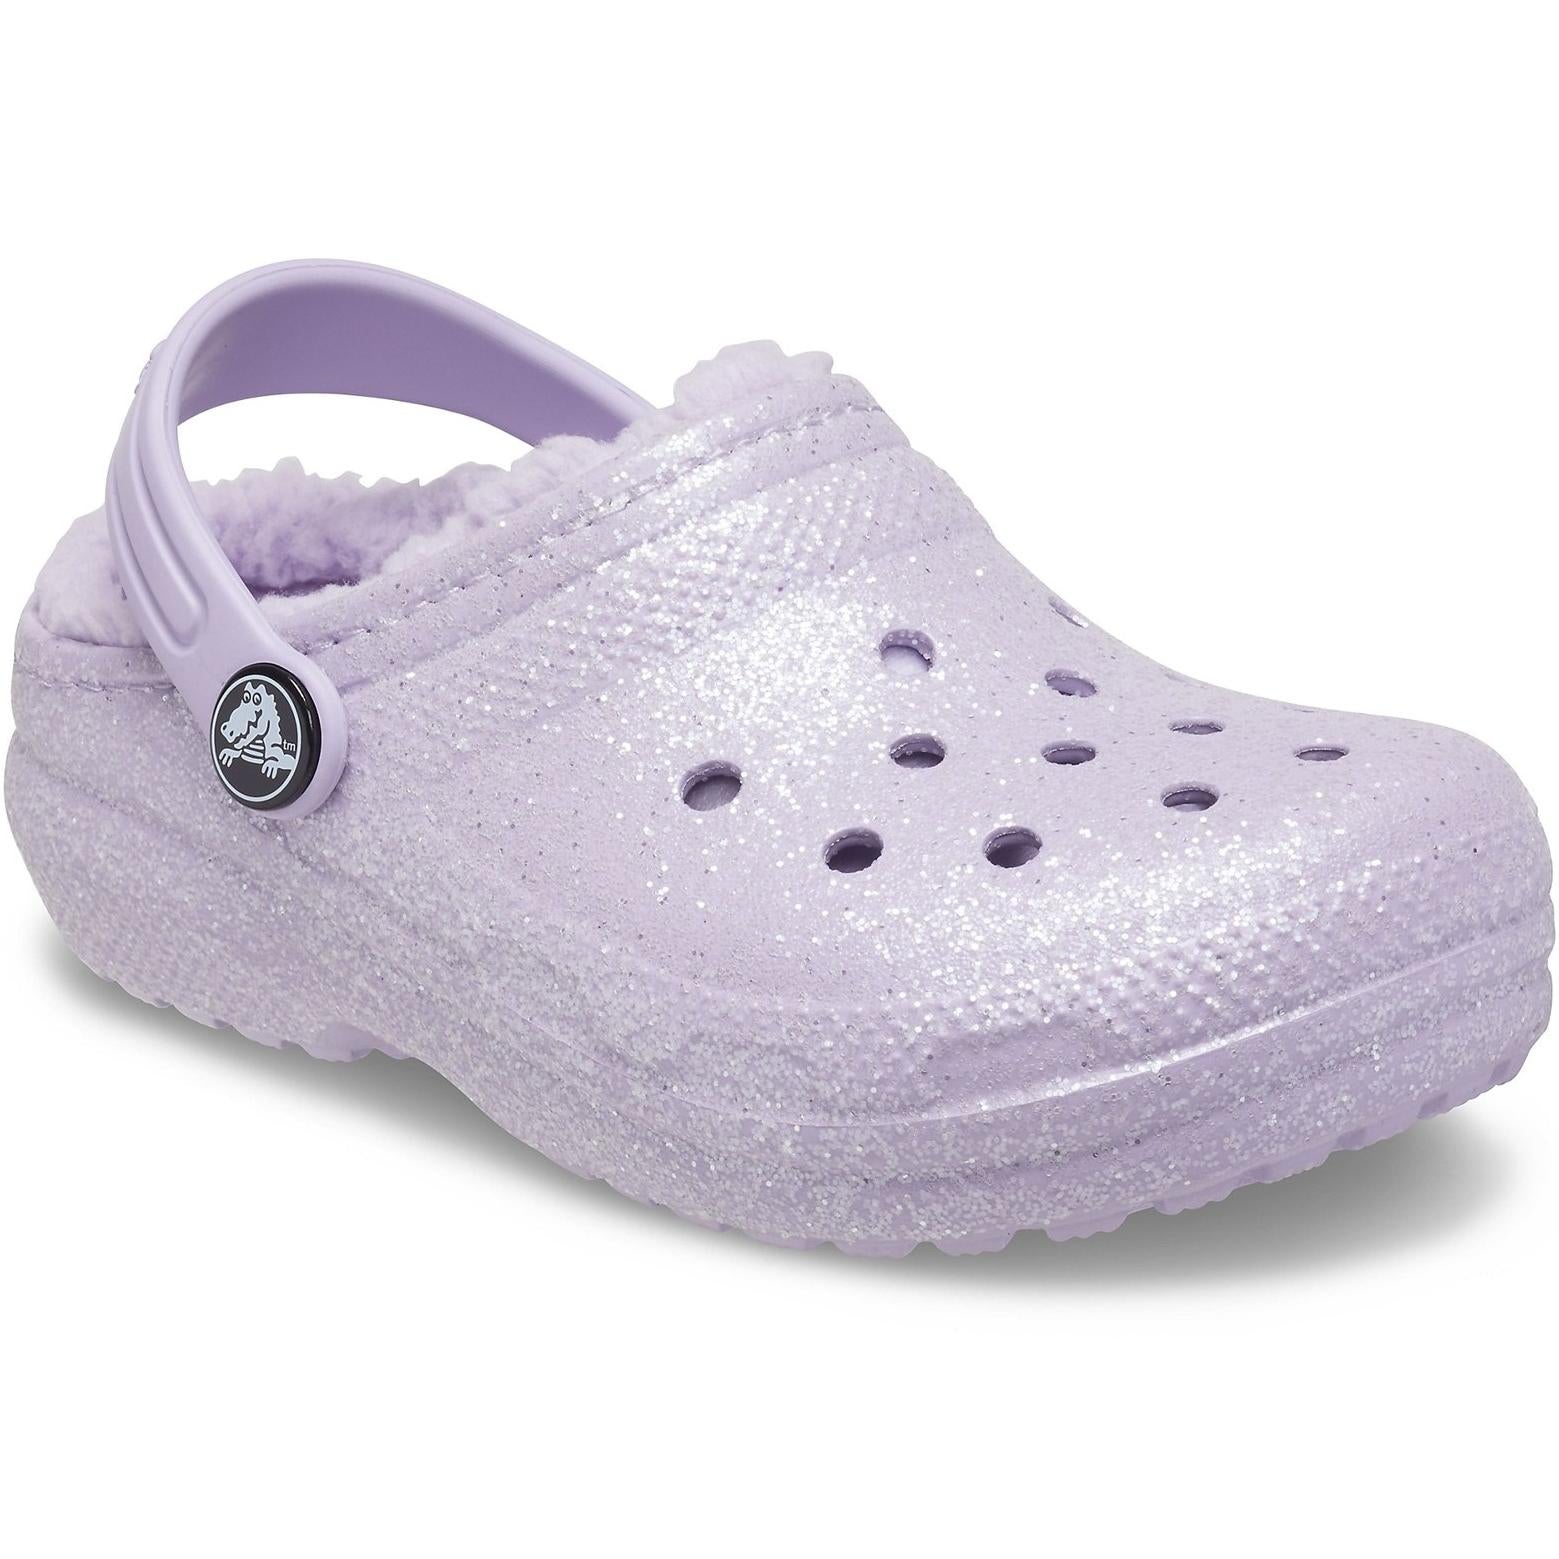 Crocs Classic Glitter Lined Clog Sandals